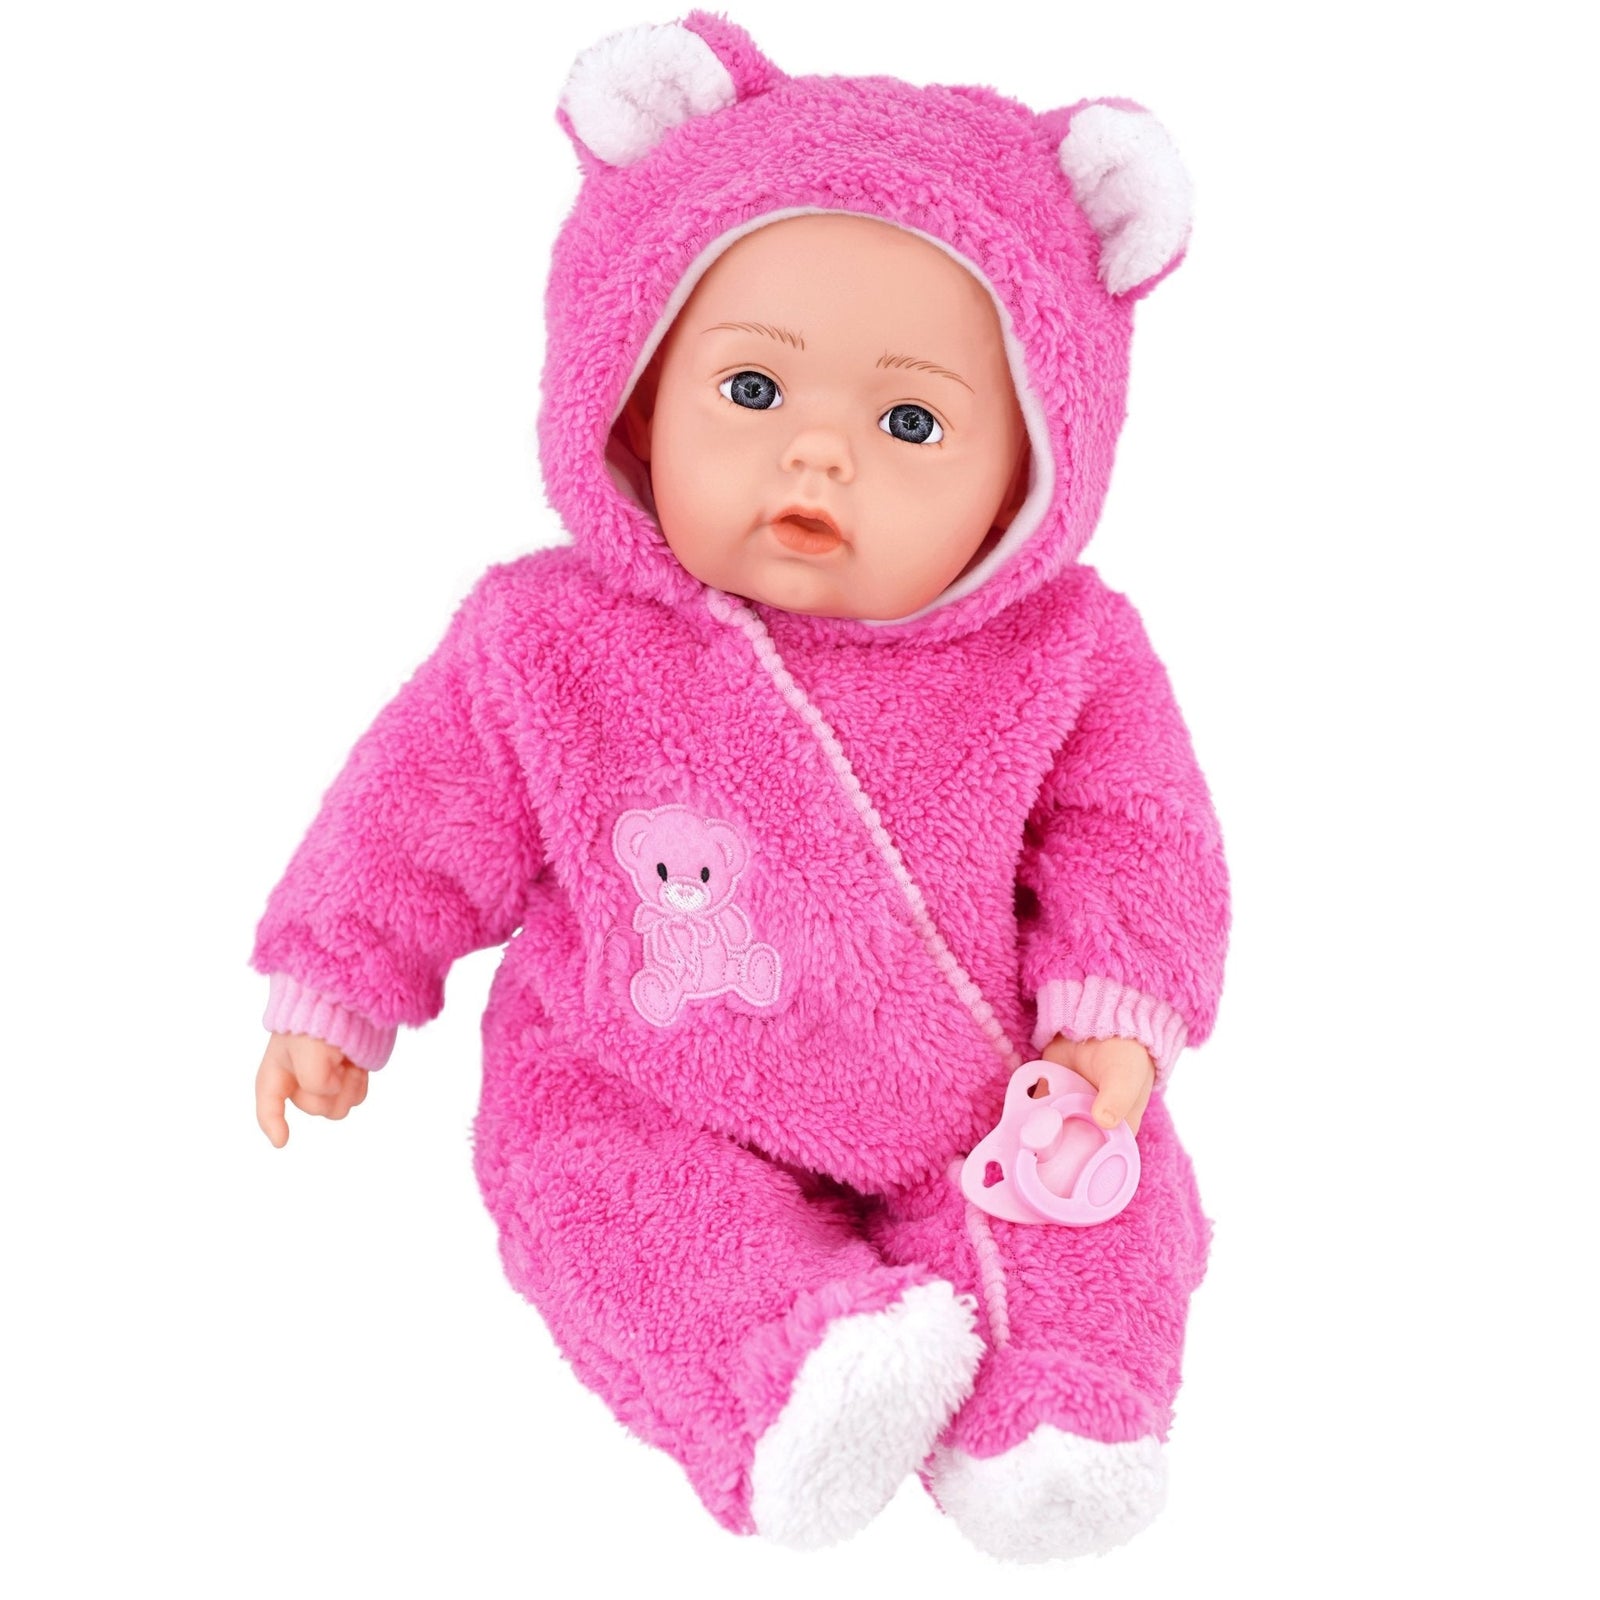 BiBi Doll Pink Bibi Baby Doll + Extra Outfit Soft Vinyl, Fabric Grey